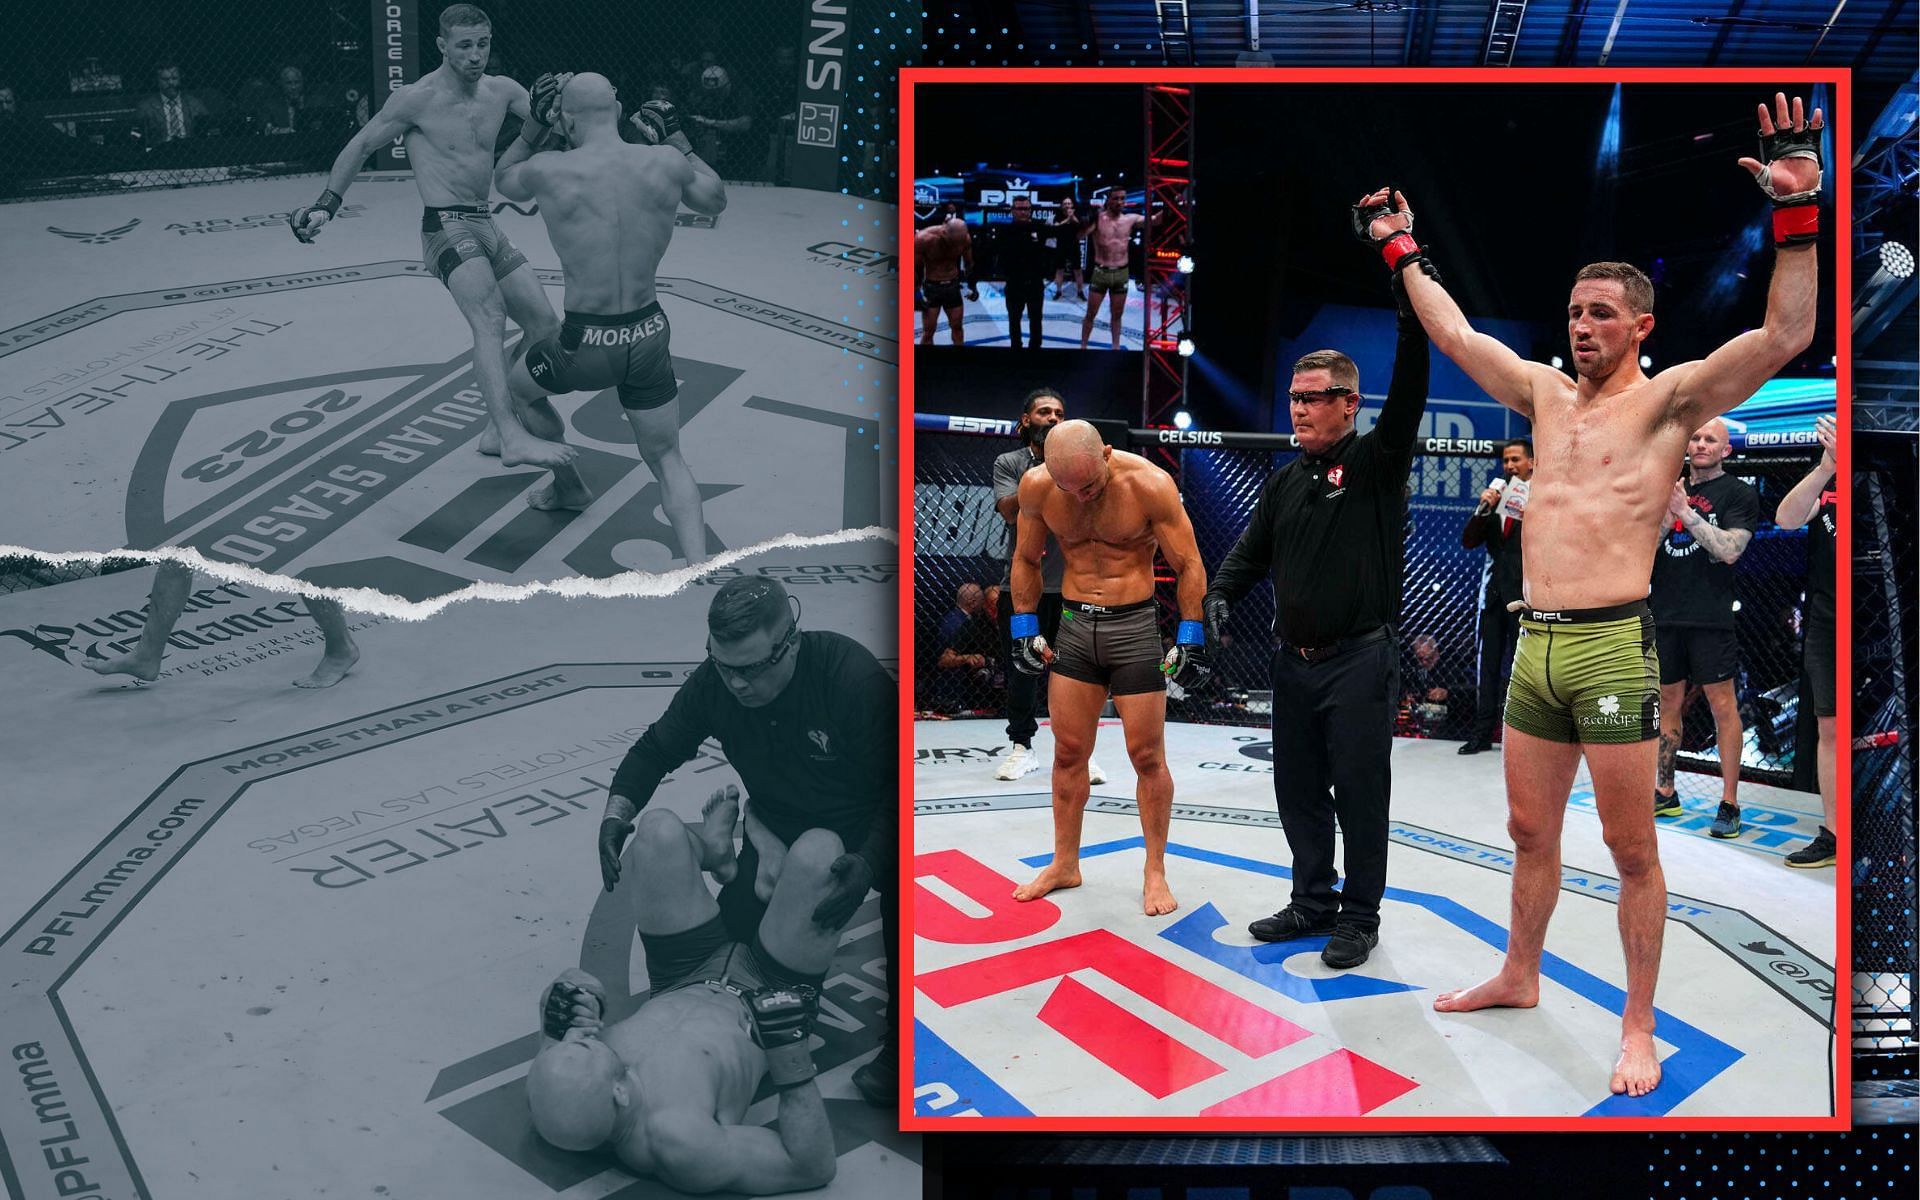 Former UFC title challenger suffers shock leg-kick TKO at PFL 1 event . [Image credits: pflmma.com and @pflmma on instagram]